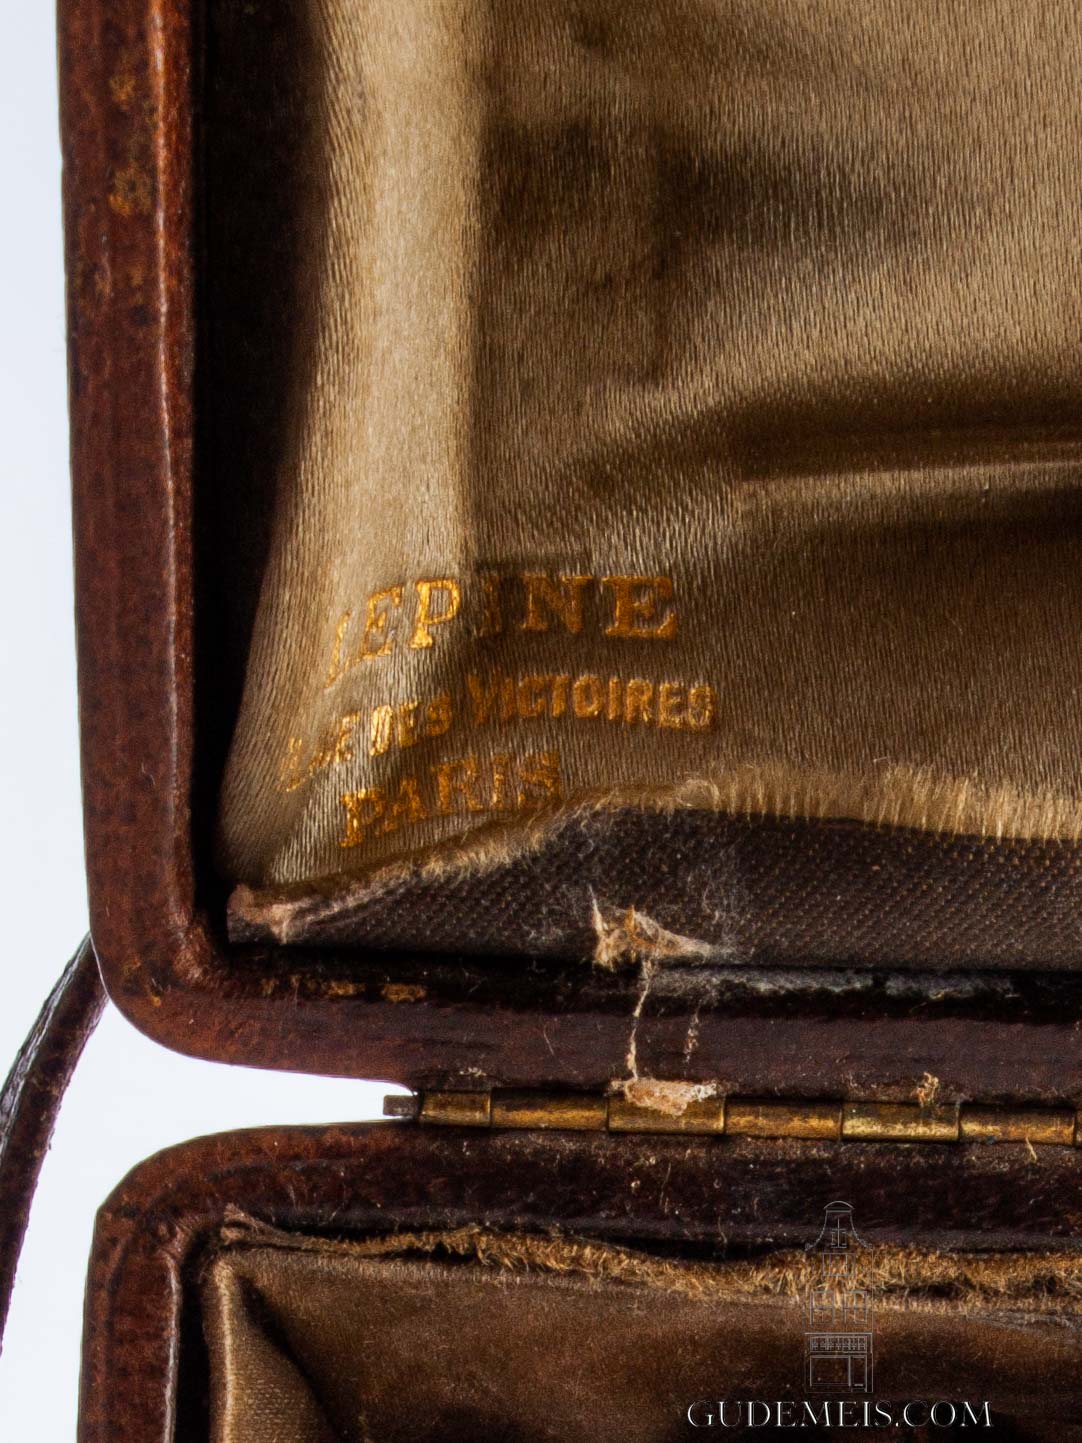 French-miniature-gilt-brass-anglaise-engraved-antique-carriage-clock-lepine-Paris-travel-case